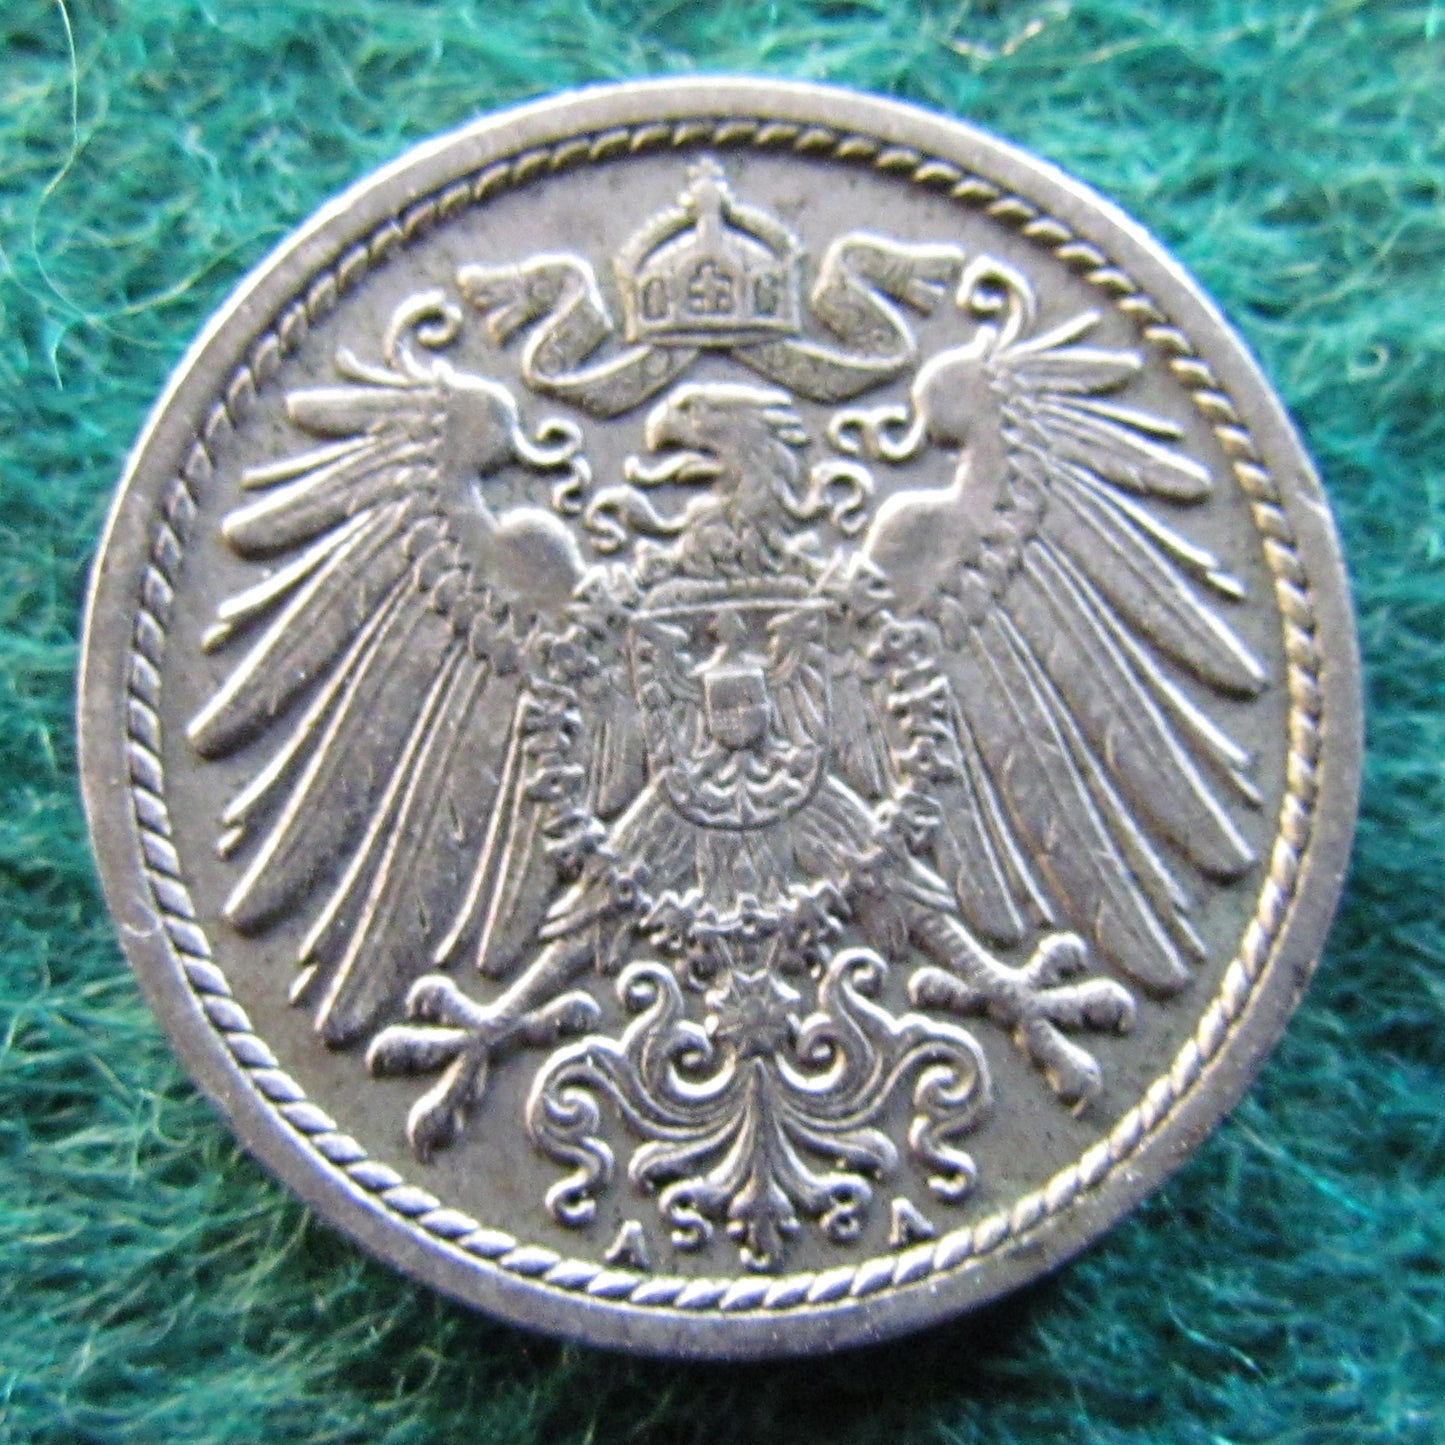 Germany 1911 5 Pfennig Coin - Circulated